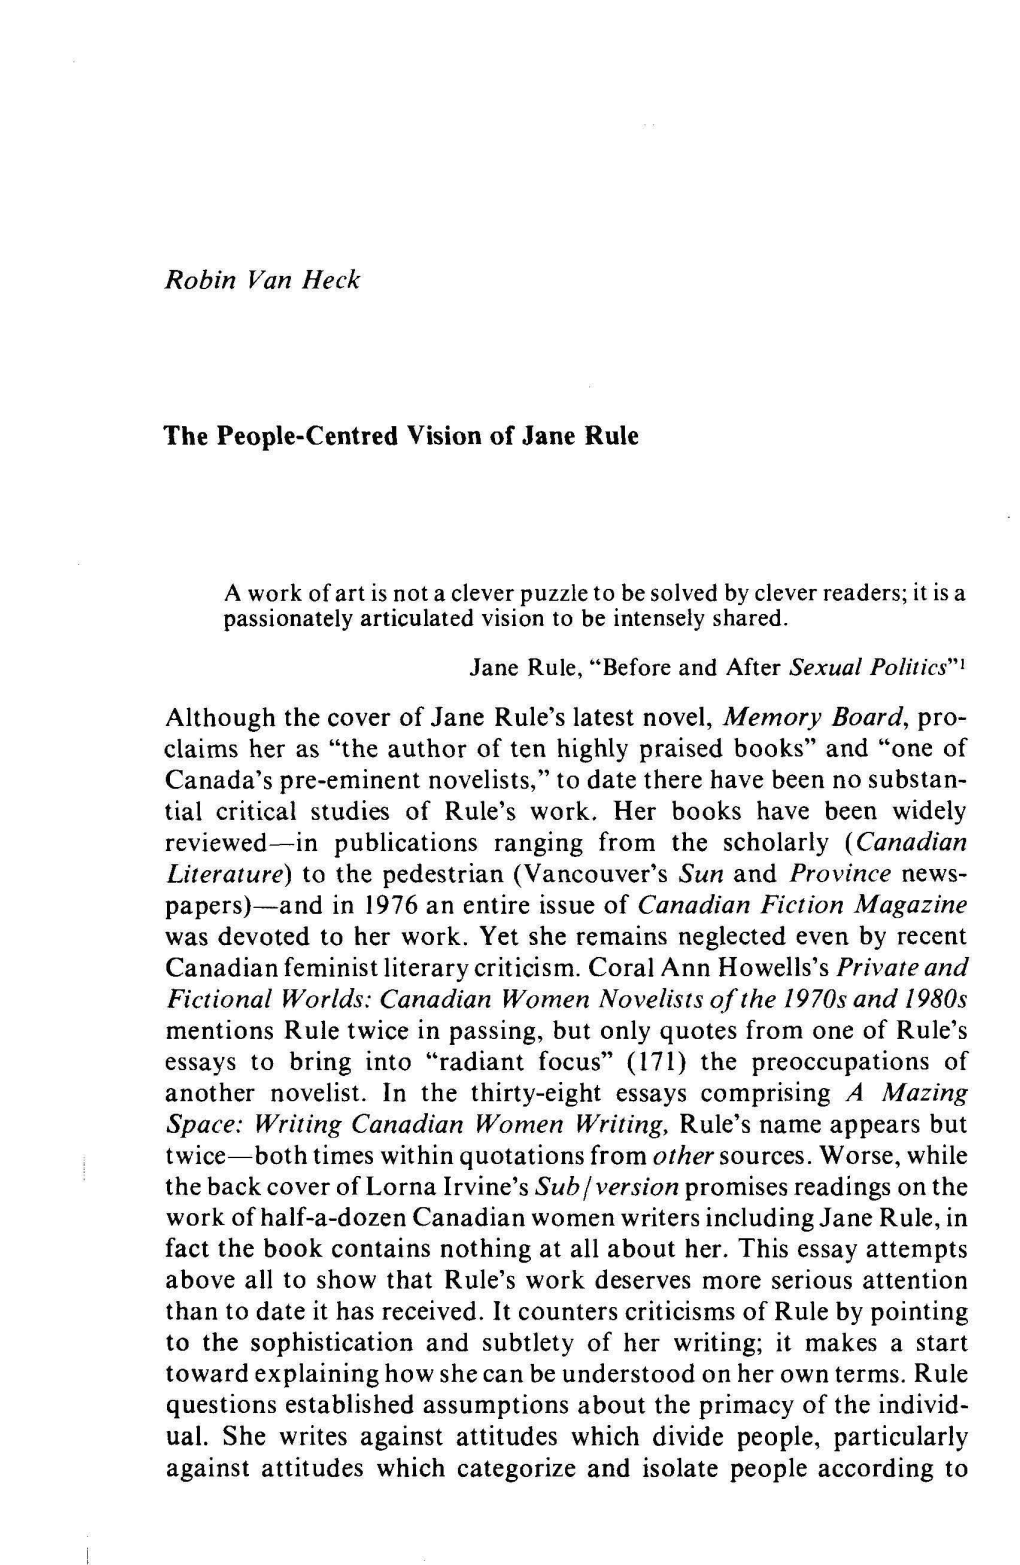 Robin Van Heck the People-Centred Vision of Jane Rule